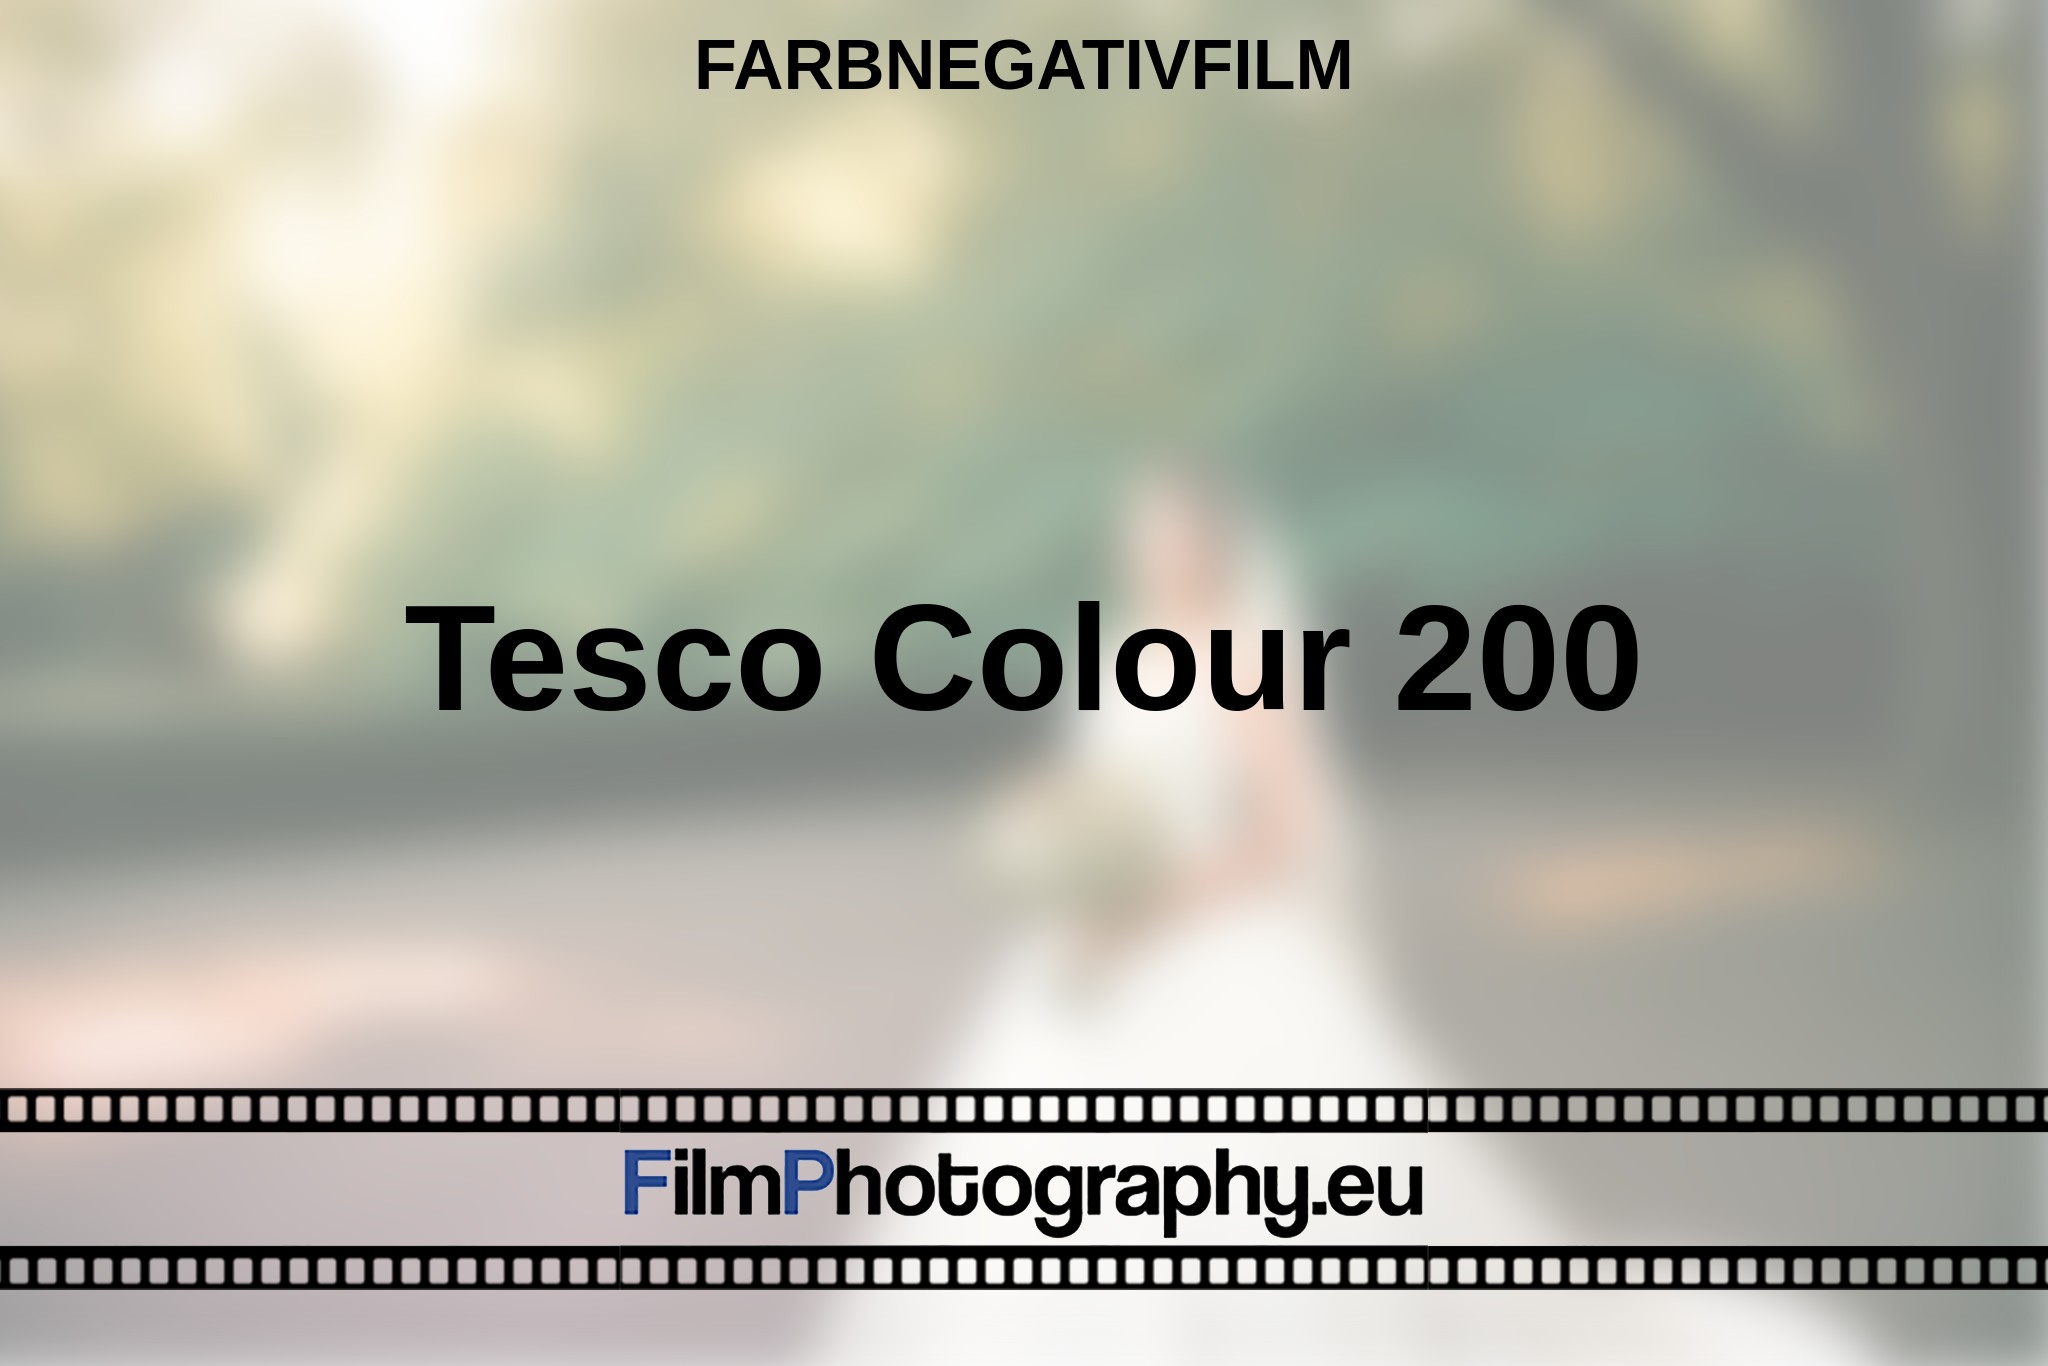 tesco-colour-200-farbnegativfilm-bnv.jpg